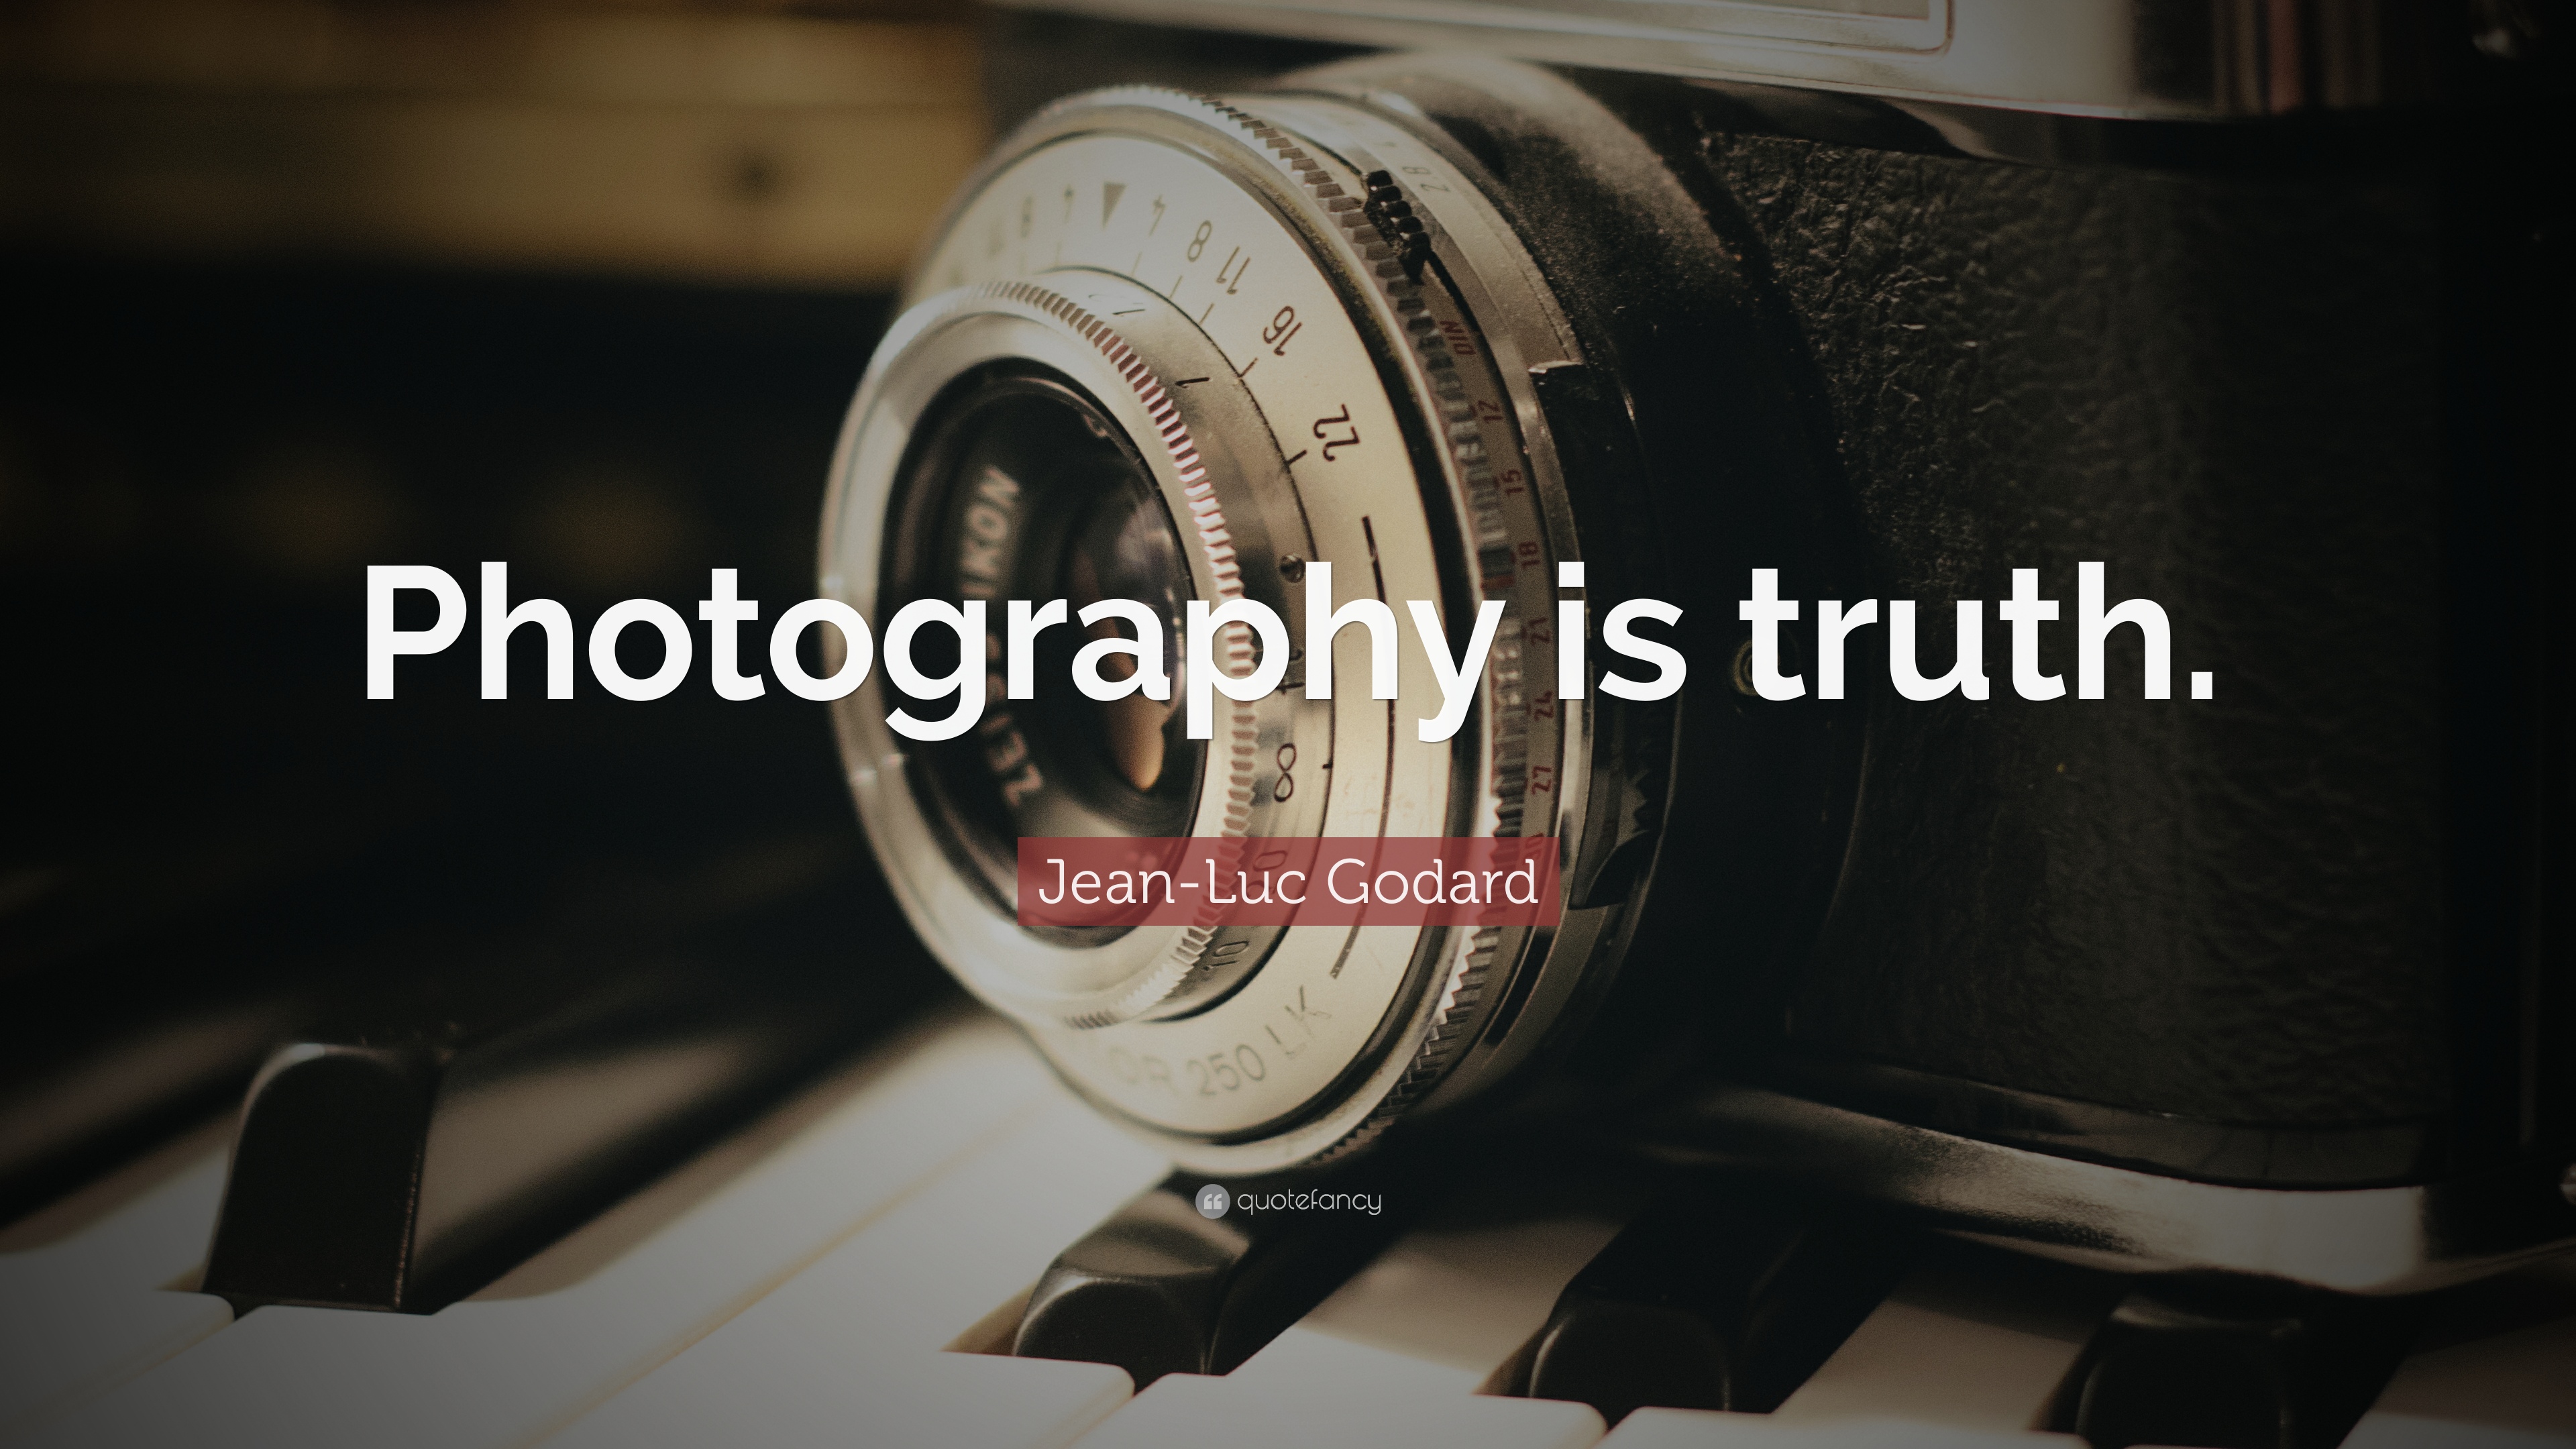 Photography is truth. Jean-Luc Godard